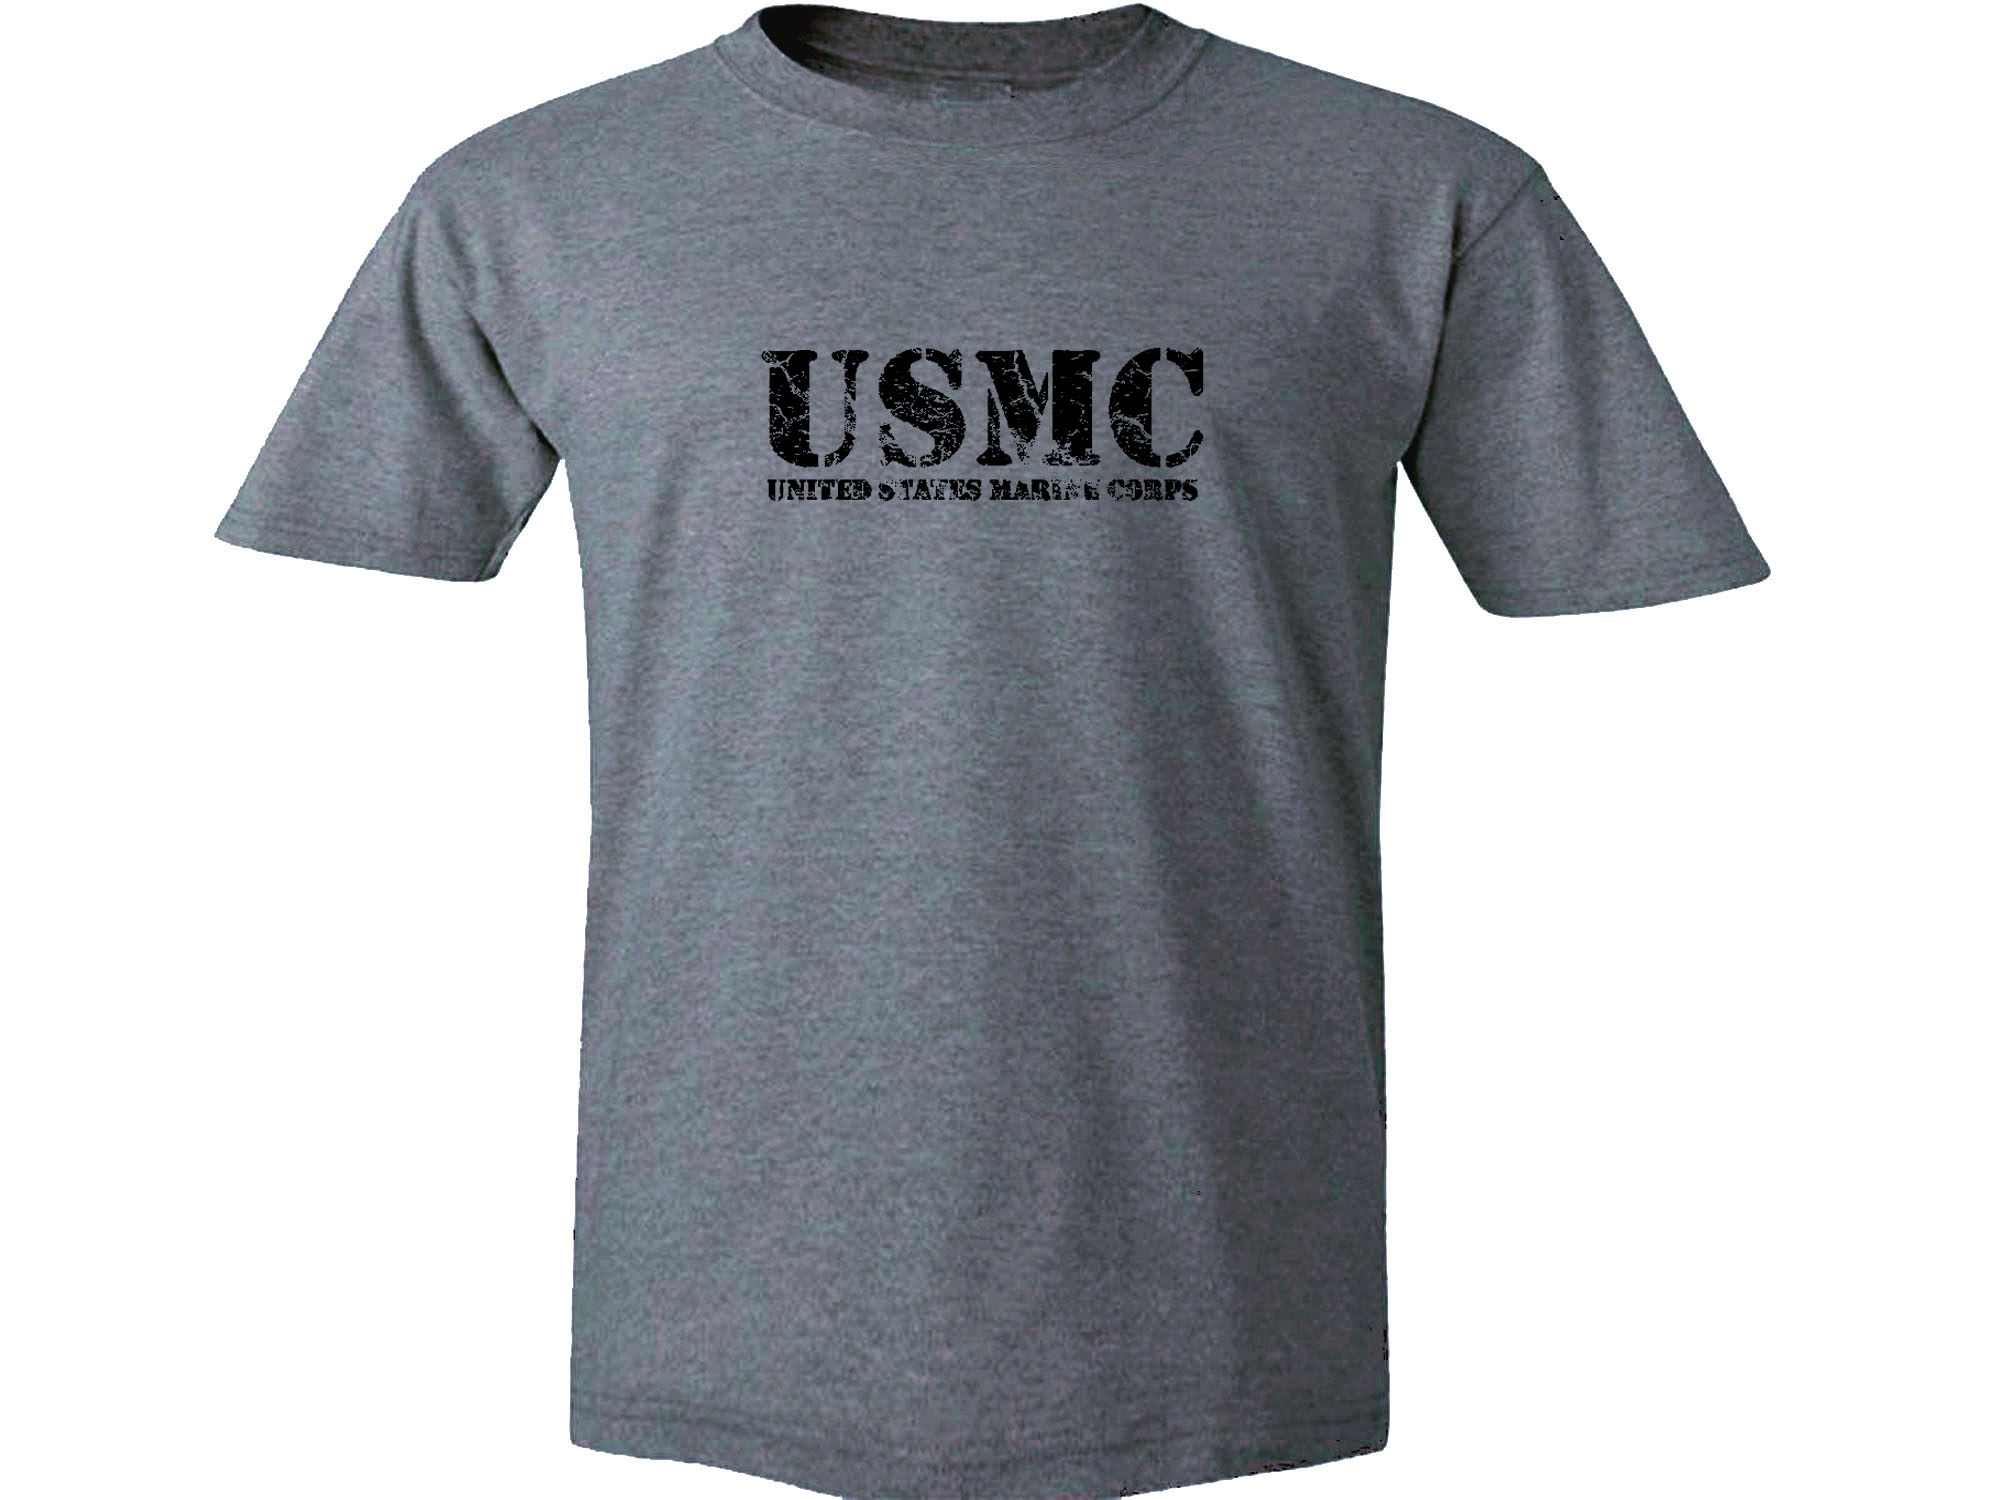 US army marine corps USMC gray t-shirt 2